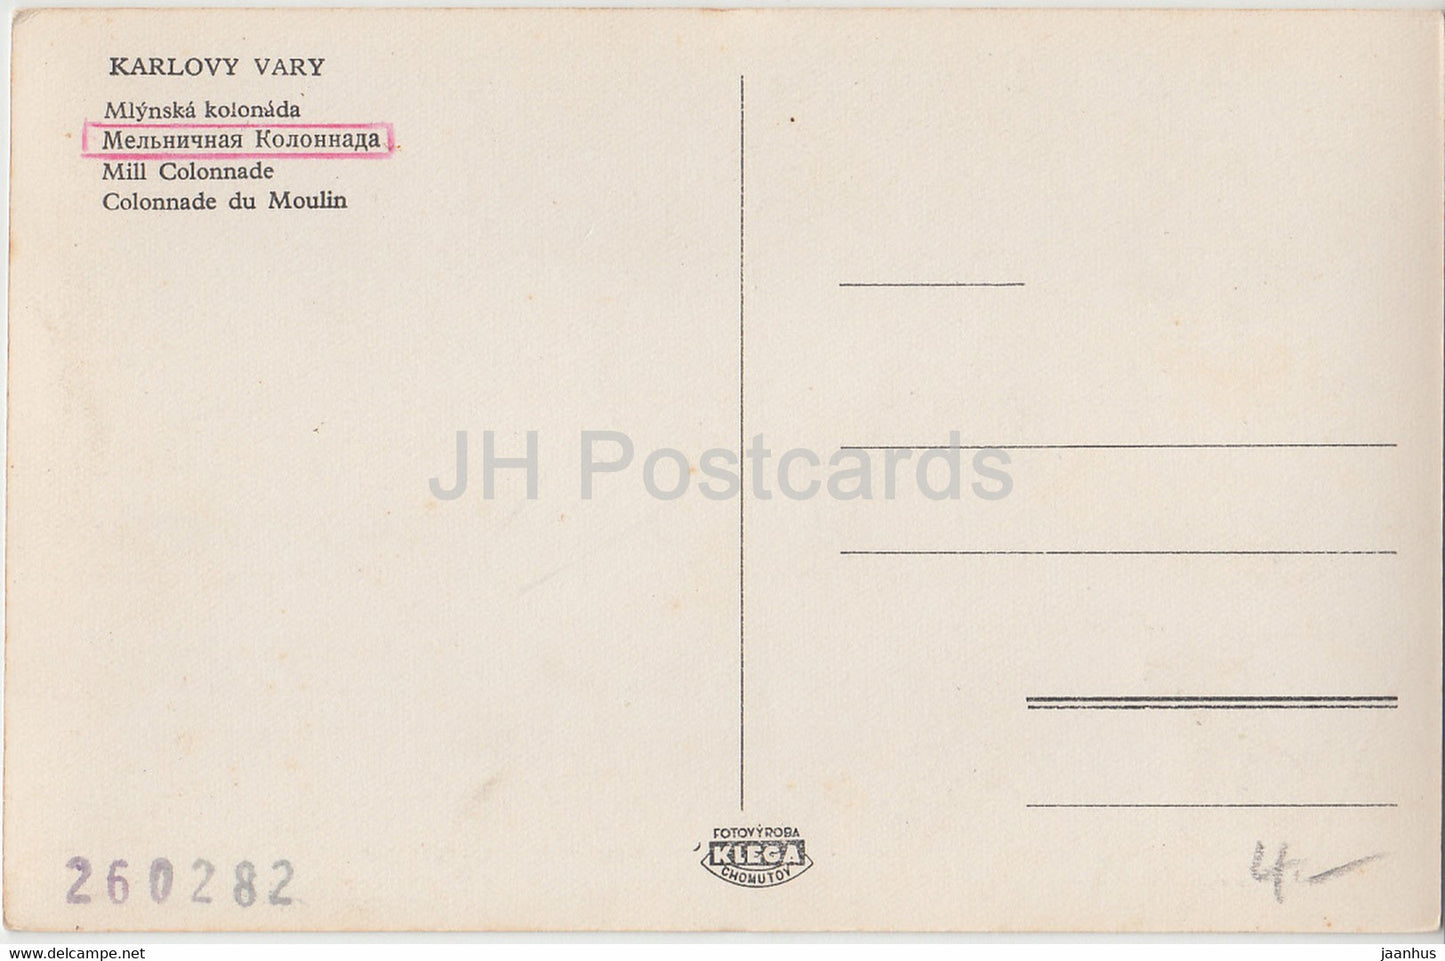 Karlovy Vary - Karlsbad - Mlynska kolonada - Mill Colonnade - carte postale ancienne - République tchèque - inutilisée